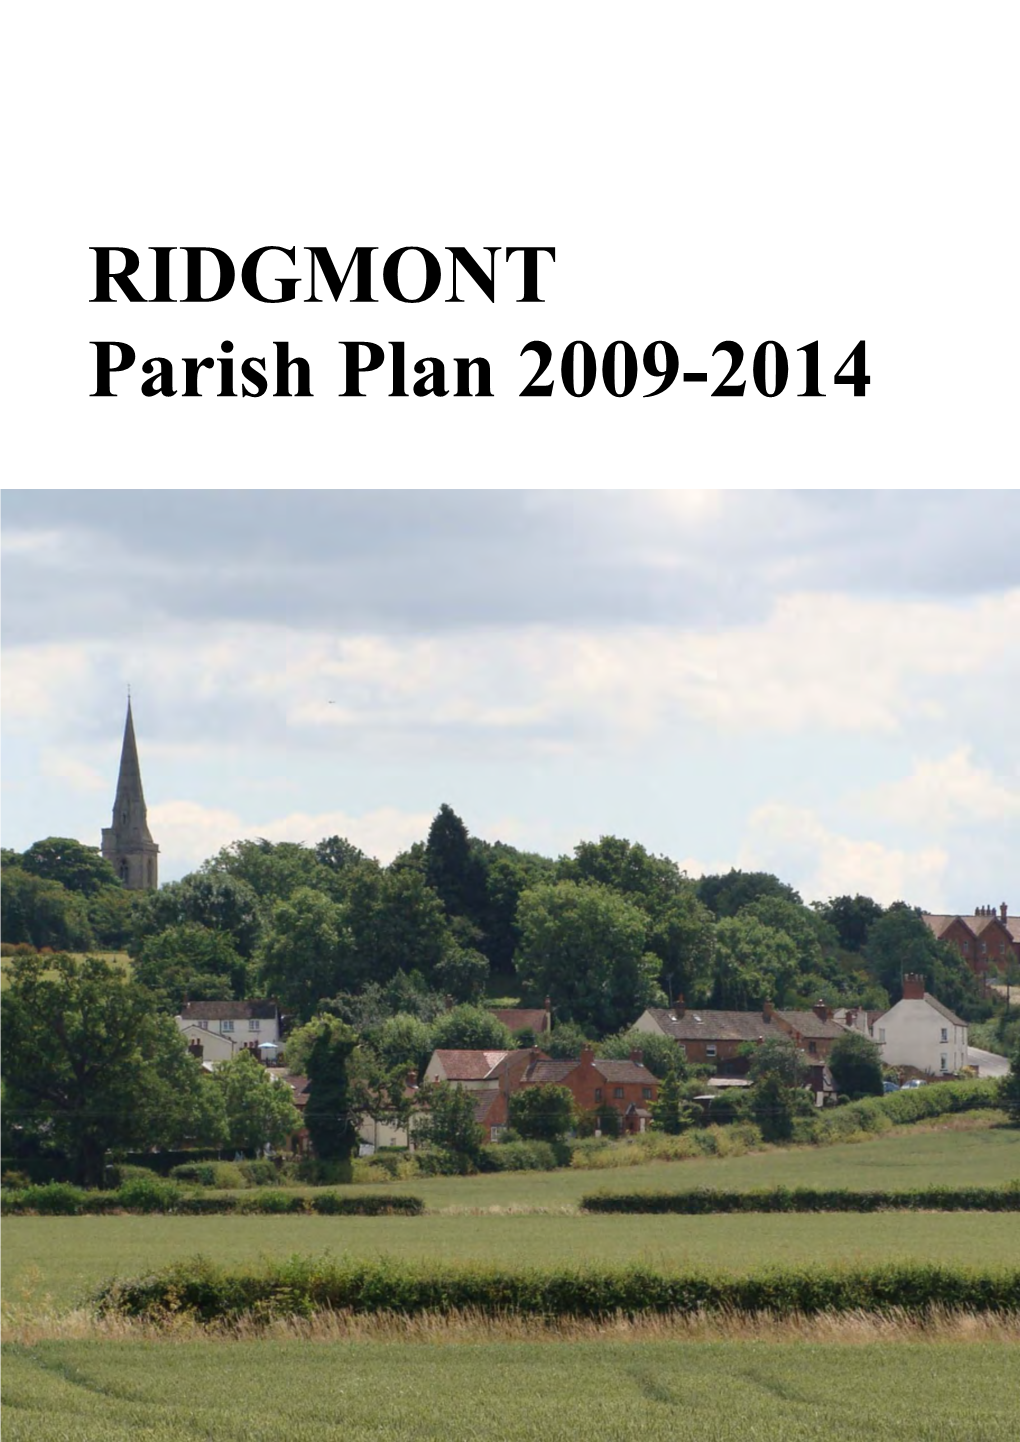 RIDGMONT Parish Plan 2009-2014